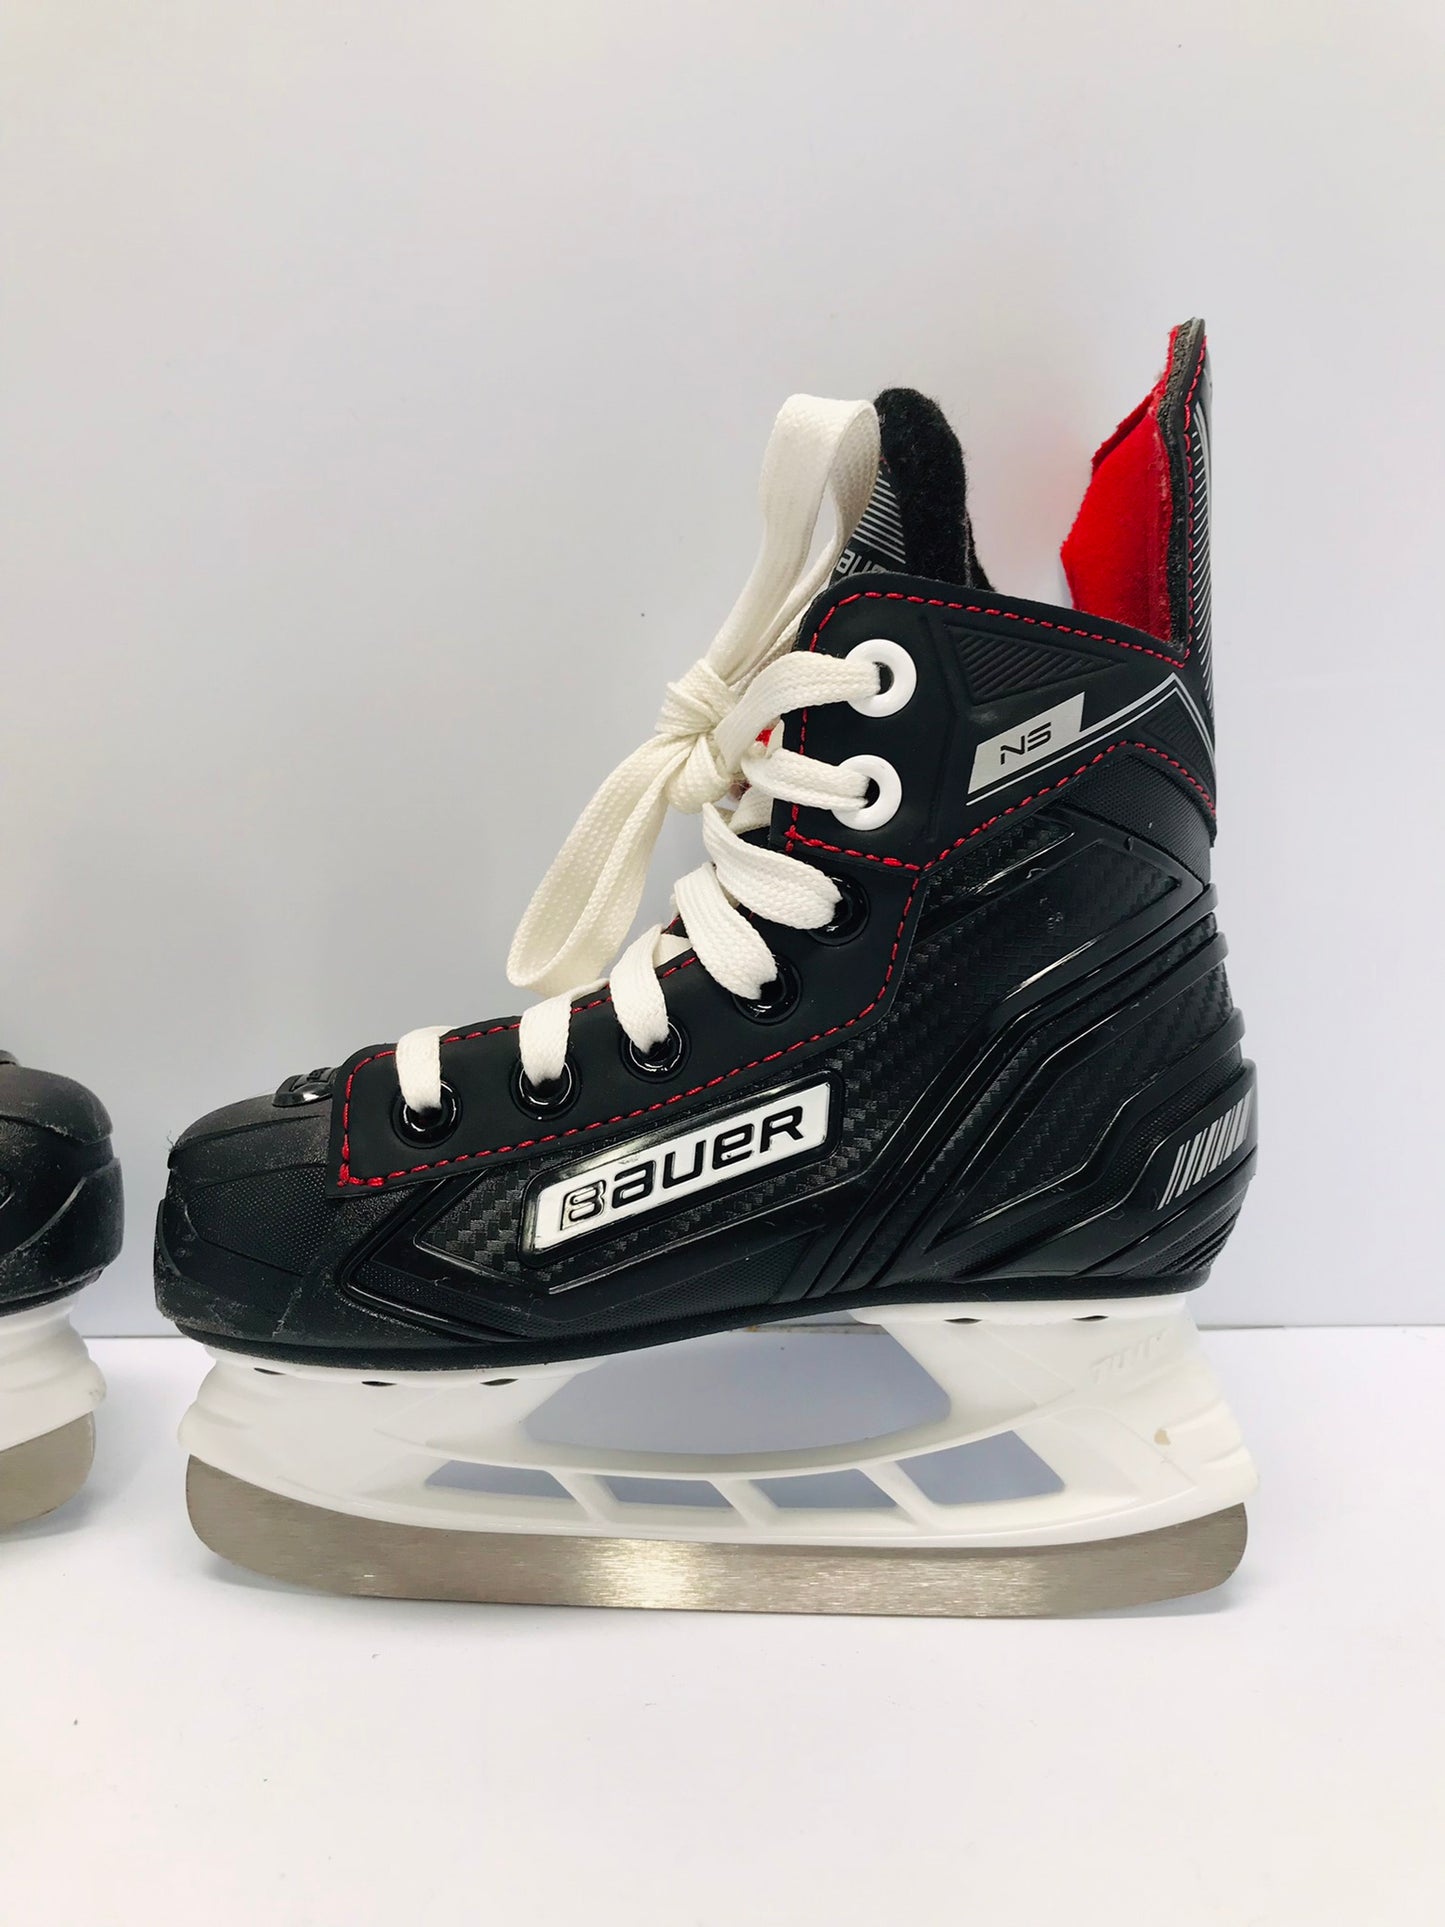 Hockey Skates Child Size 10 Shoe Size Toddler Bauer NS New Demo Model